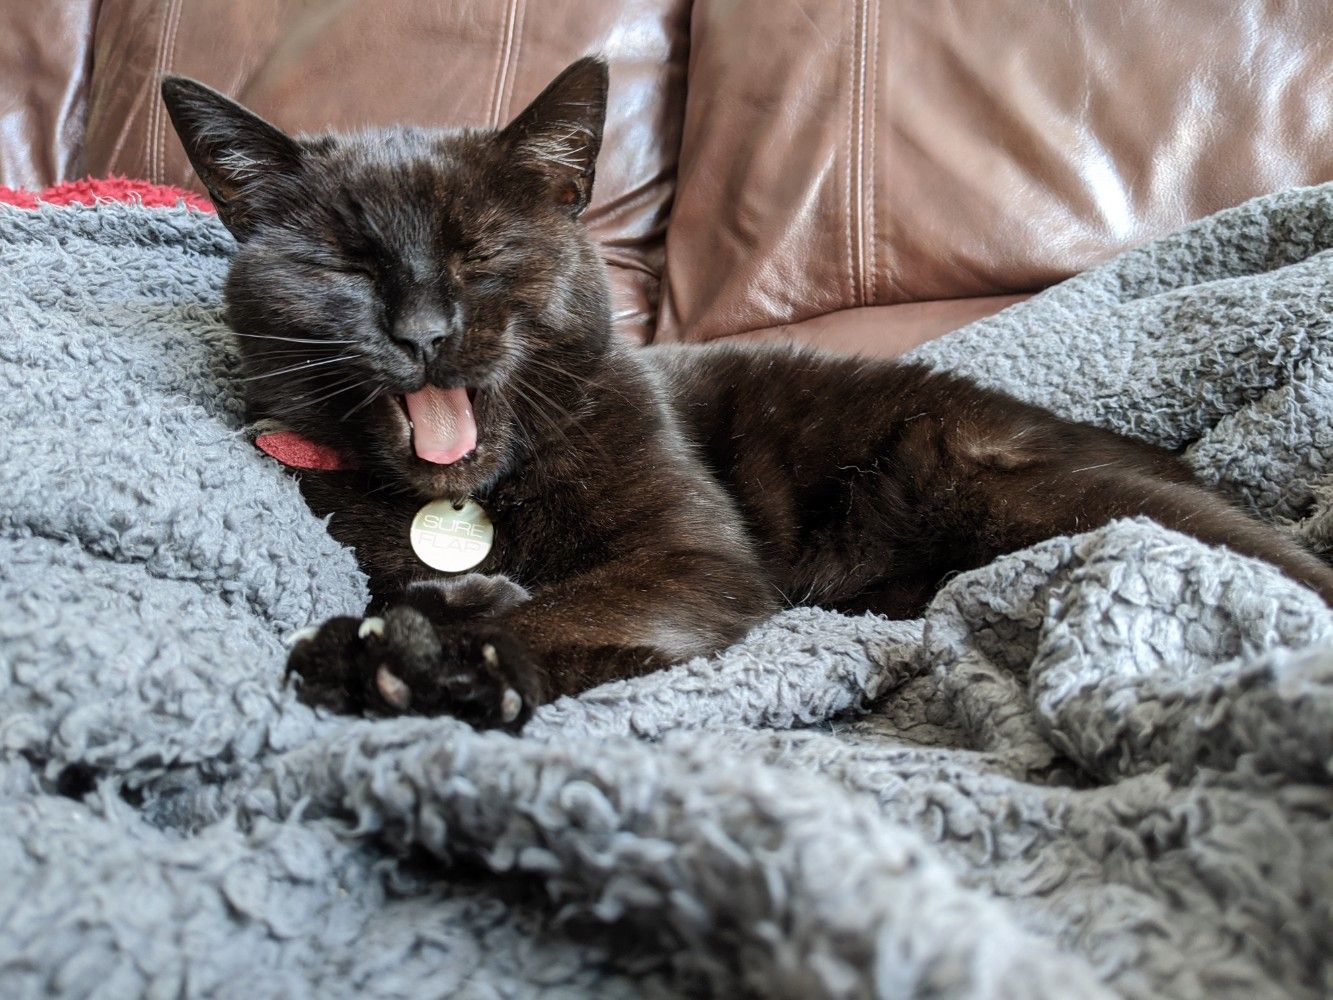 Black cat sitting up on a grey blanket, yawning